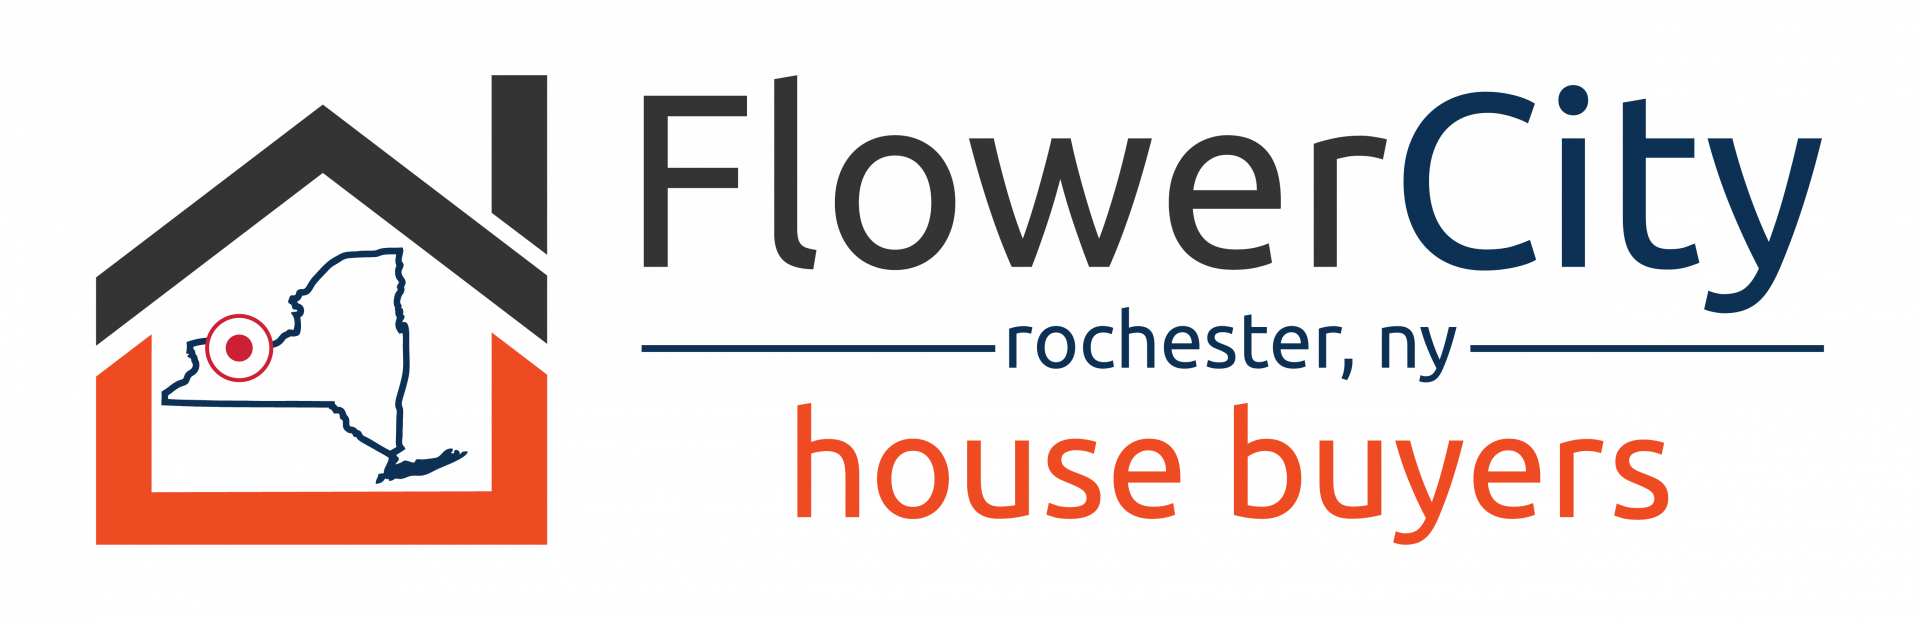 Flower City House Buyers logo